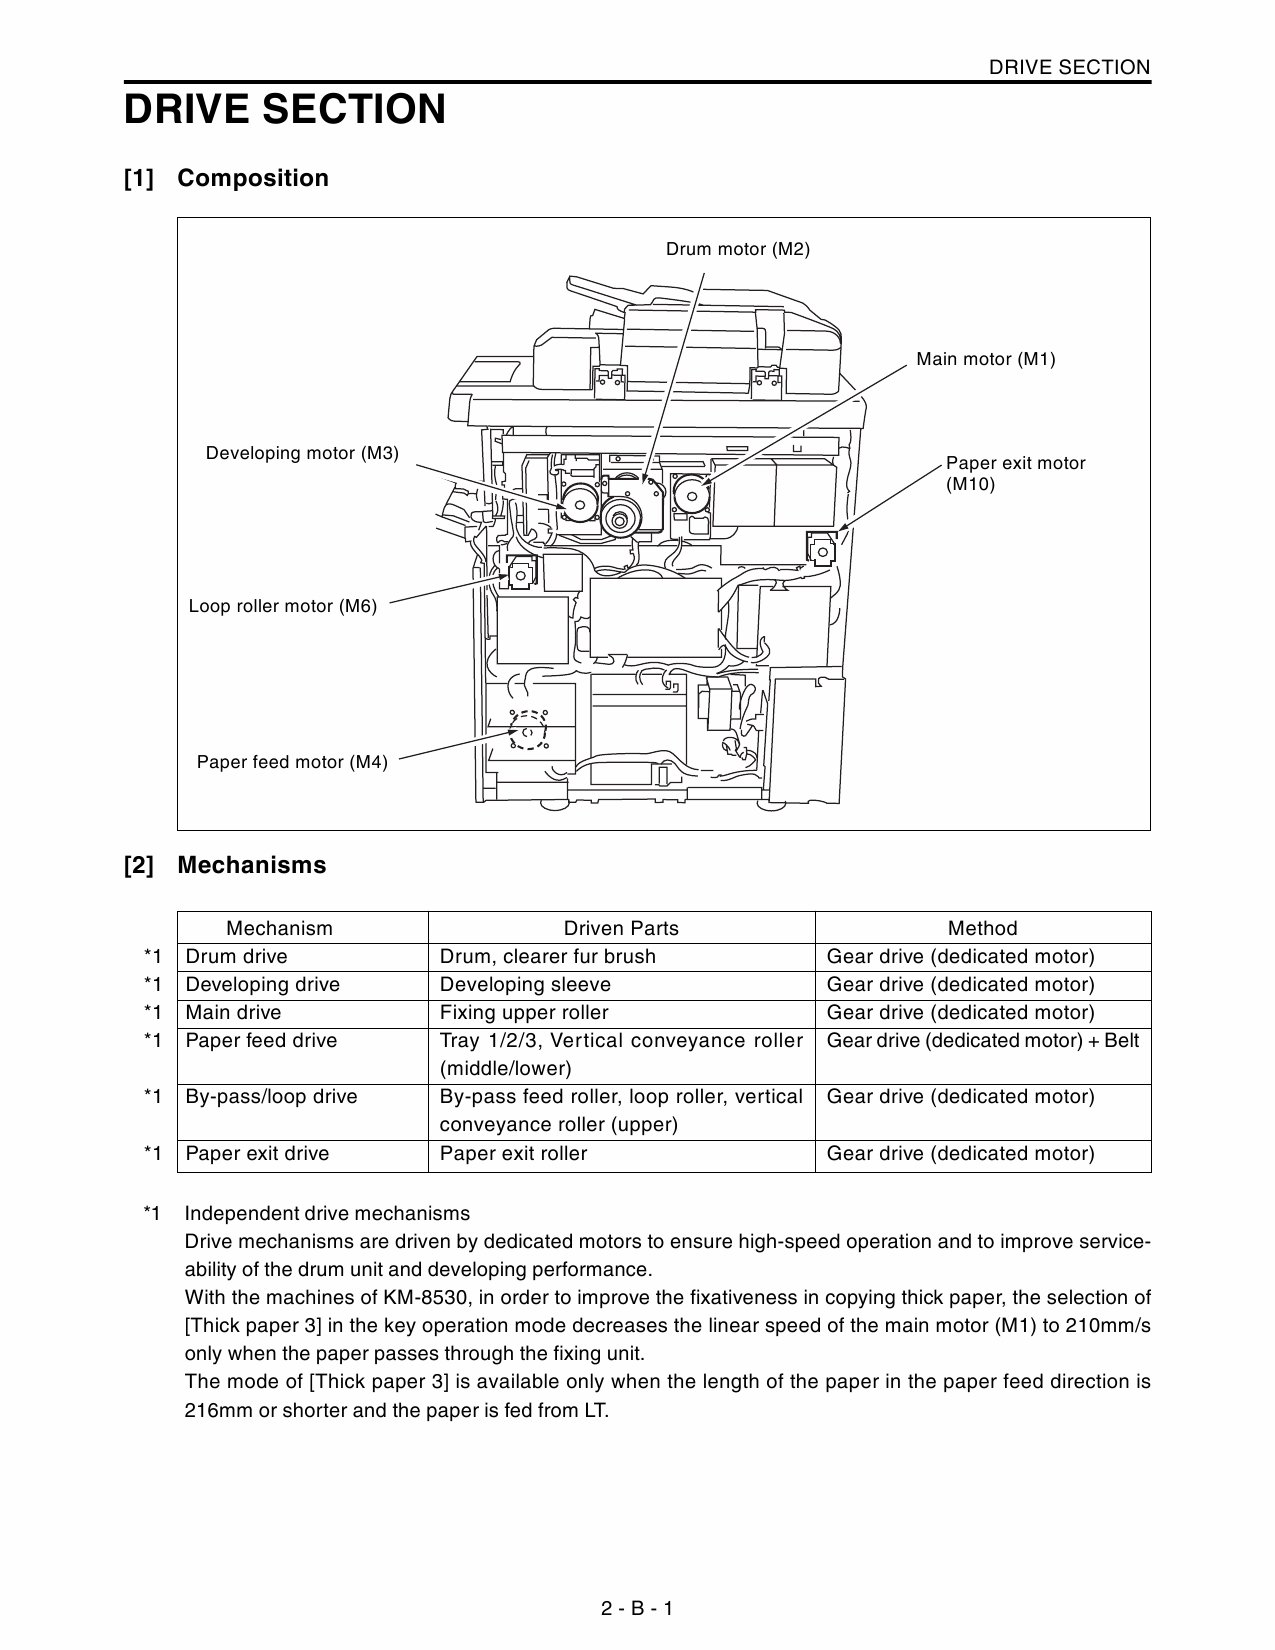 KYOCERA Copier KM-8530 Parts and Service Manual-2